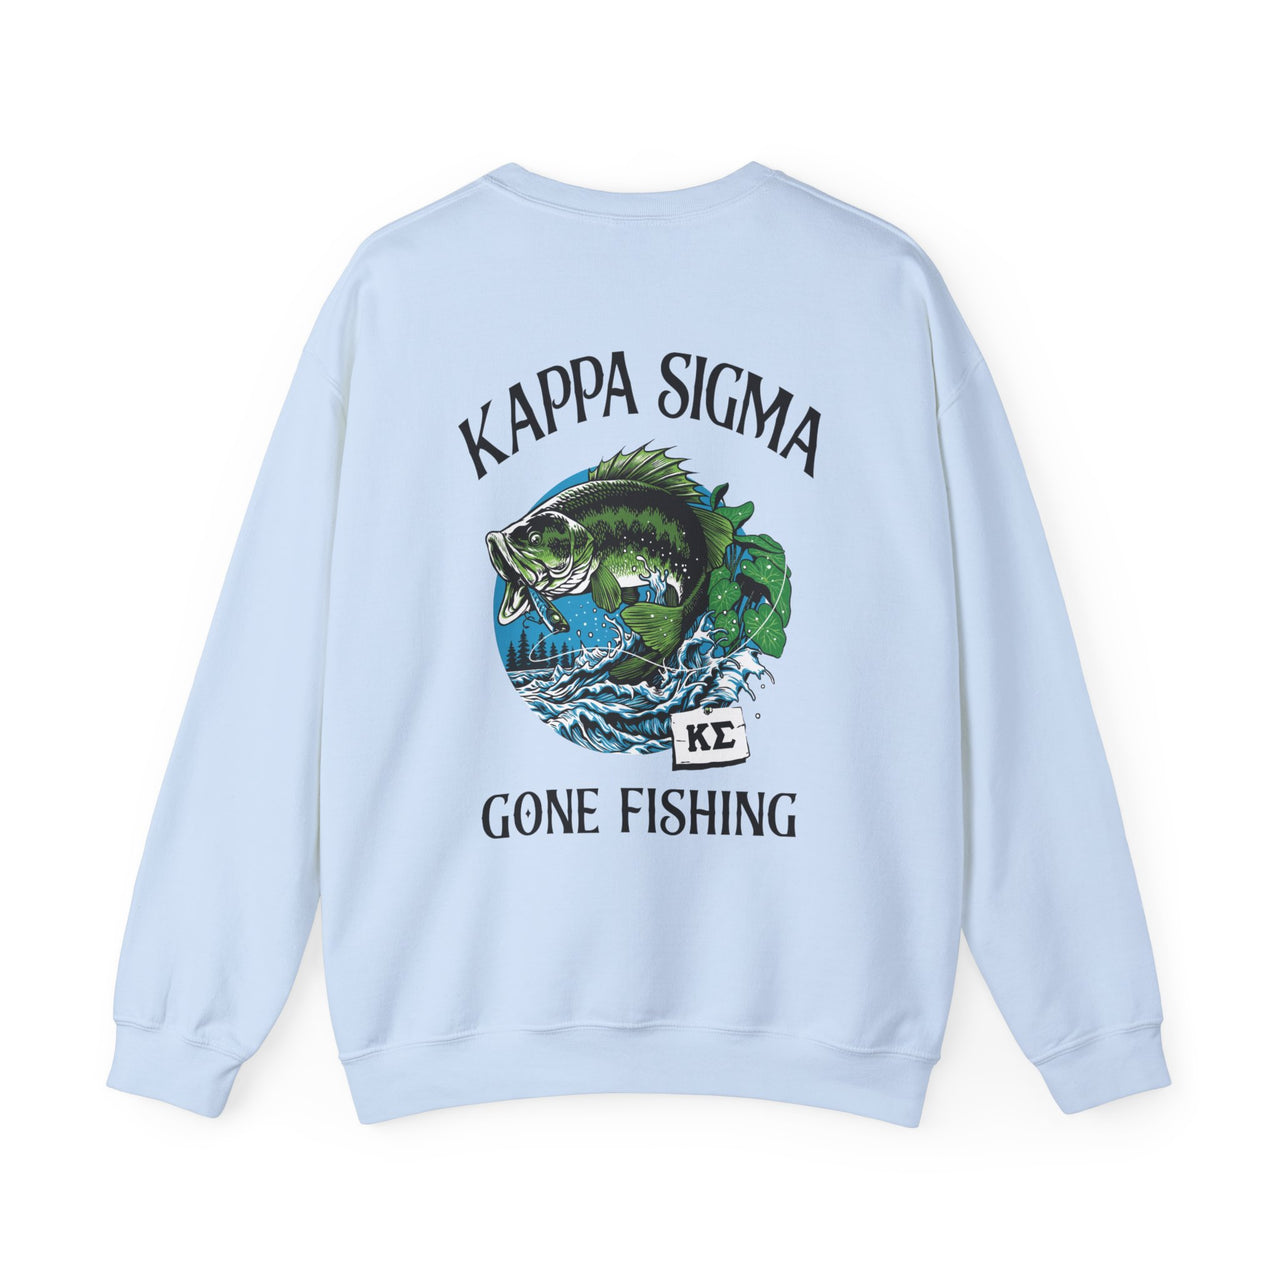 Kappa Sigma Graphic Crewneck Sweatshirt | Gone Fishing